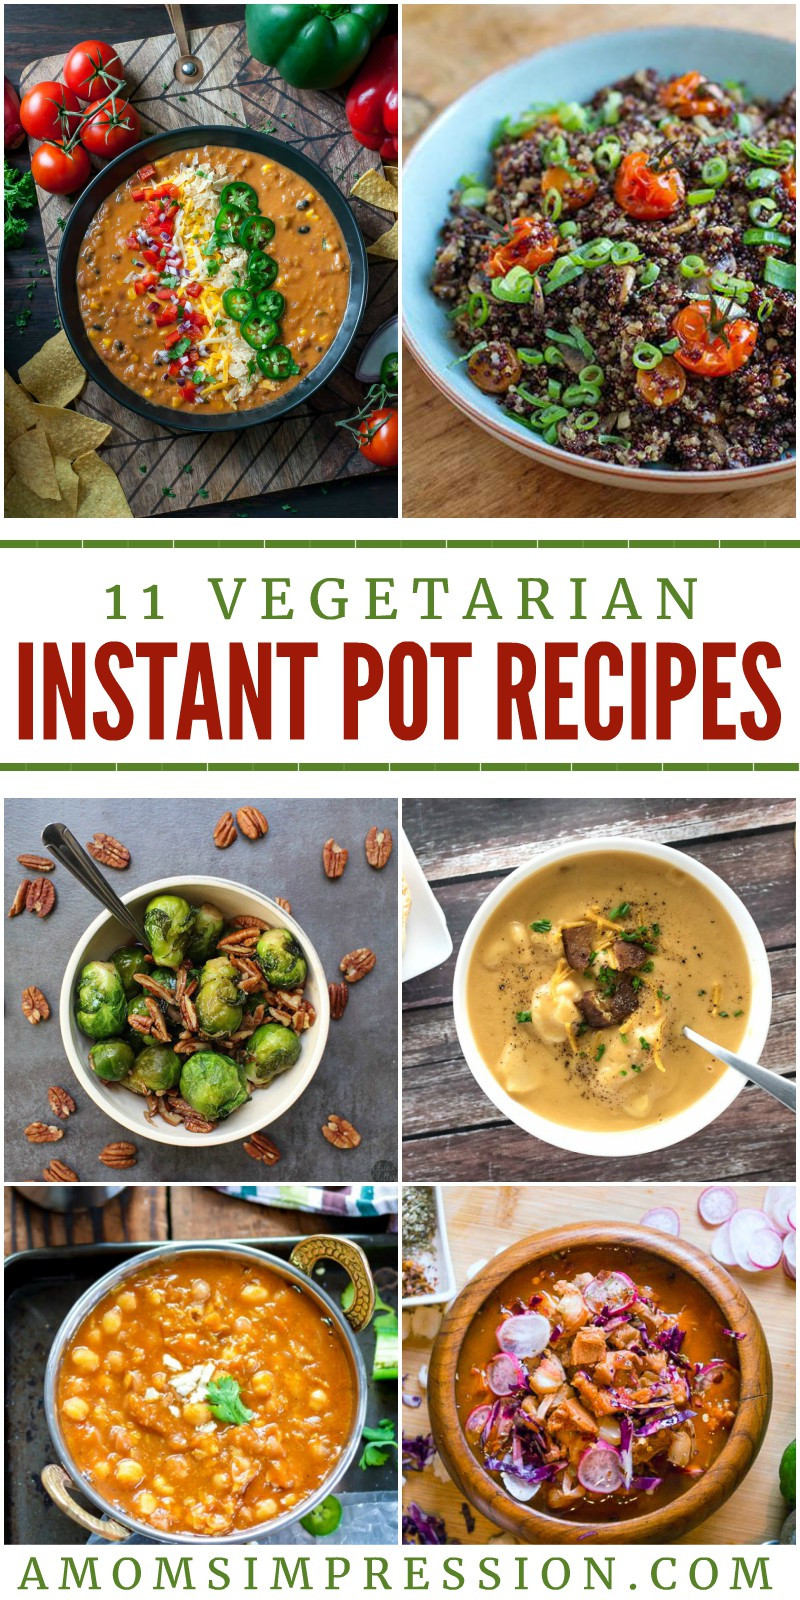 Instant Pot Vegetarian Recipes
 11 Exciting Ve arian Instant Pot Recipes Everyone will Love